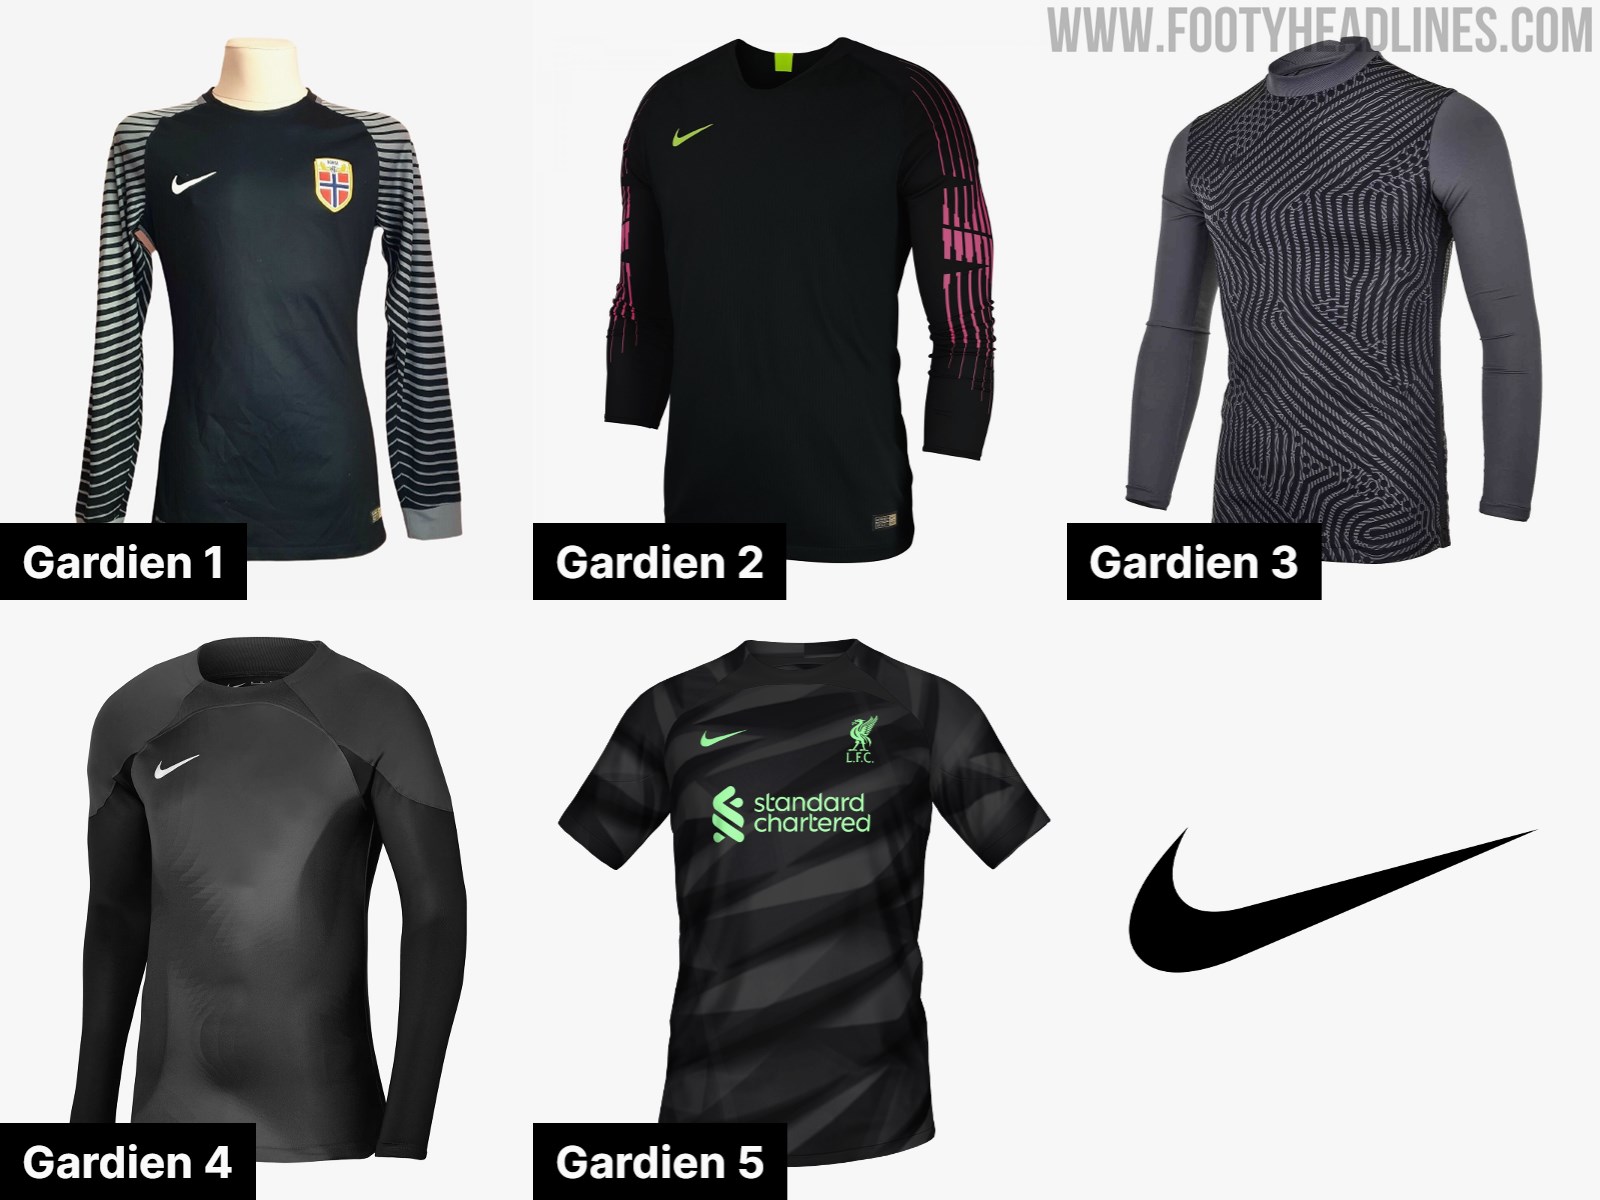 Nike 23-24 Elite Team Goalkeeper Kit Revealed